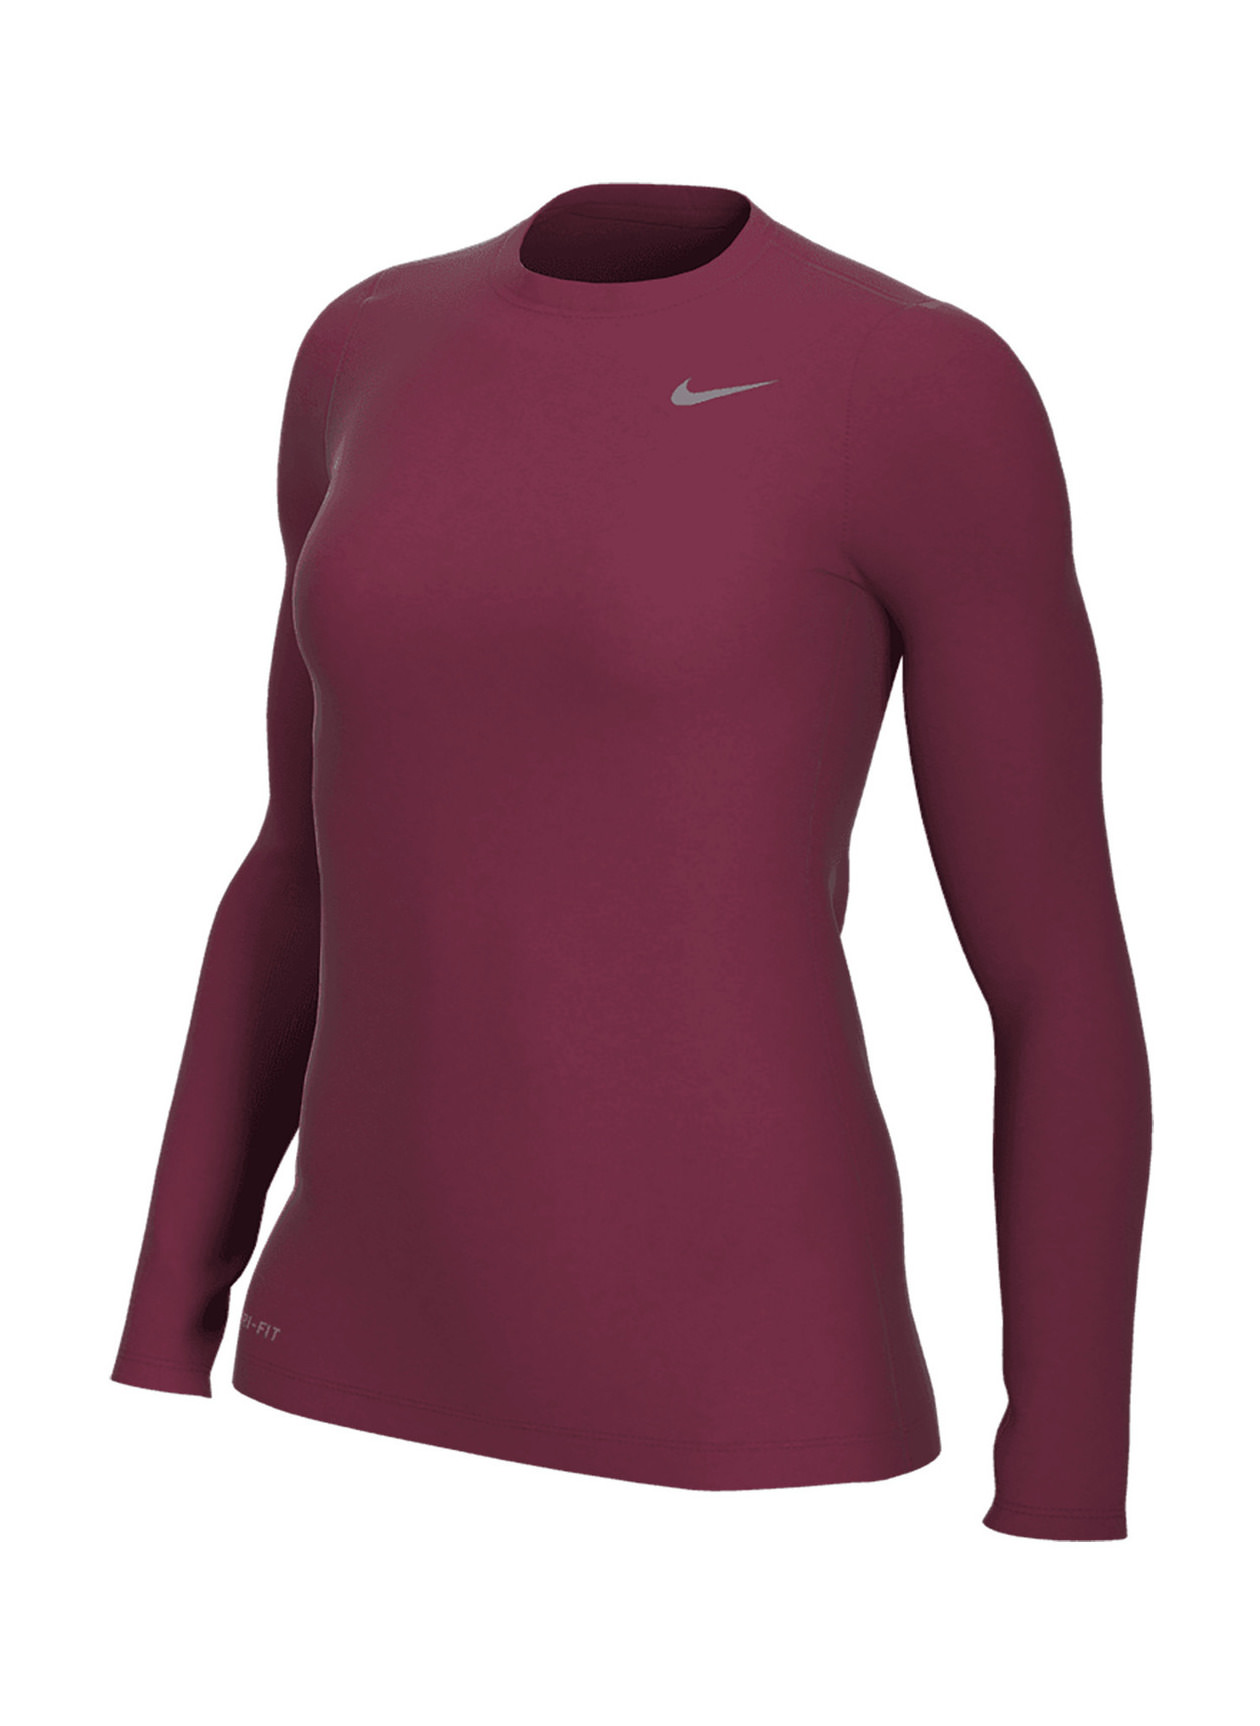 Nike Women's Team Maroon Legend Long-Sleeve Training T-Shirt